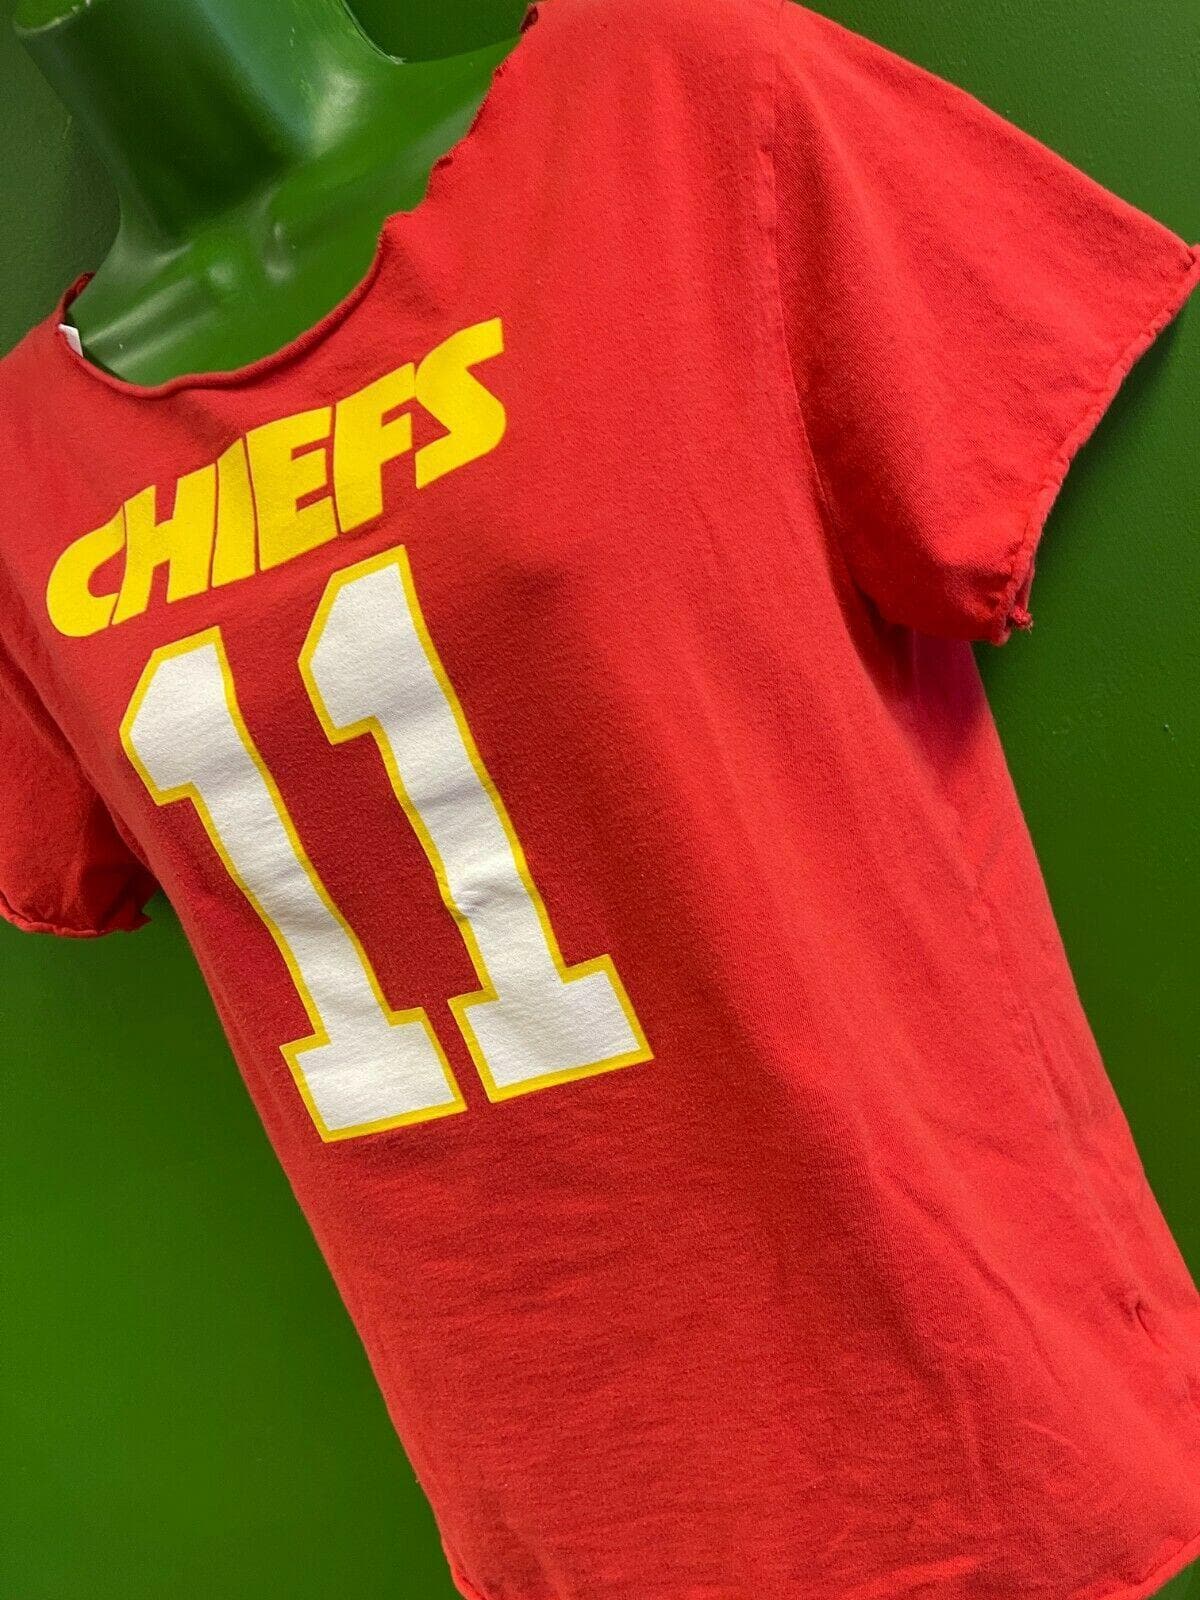 NFL Kansas City Chiefs Smith #11 Rolled Edge T-Shirt Girls' XL 14-16